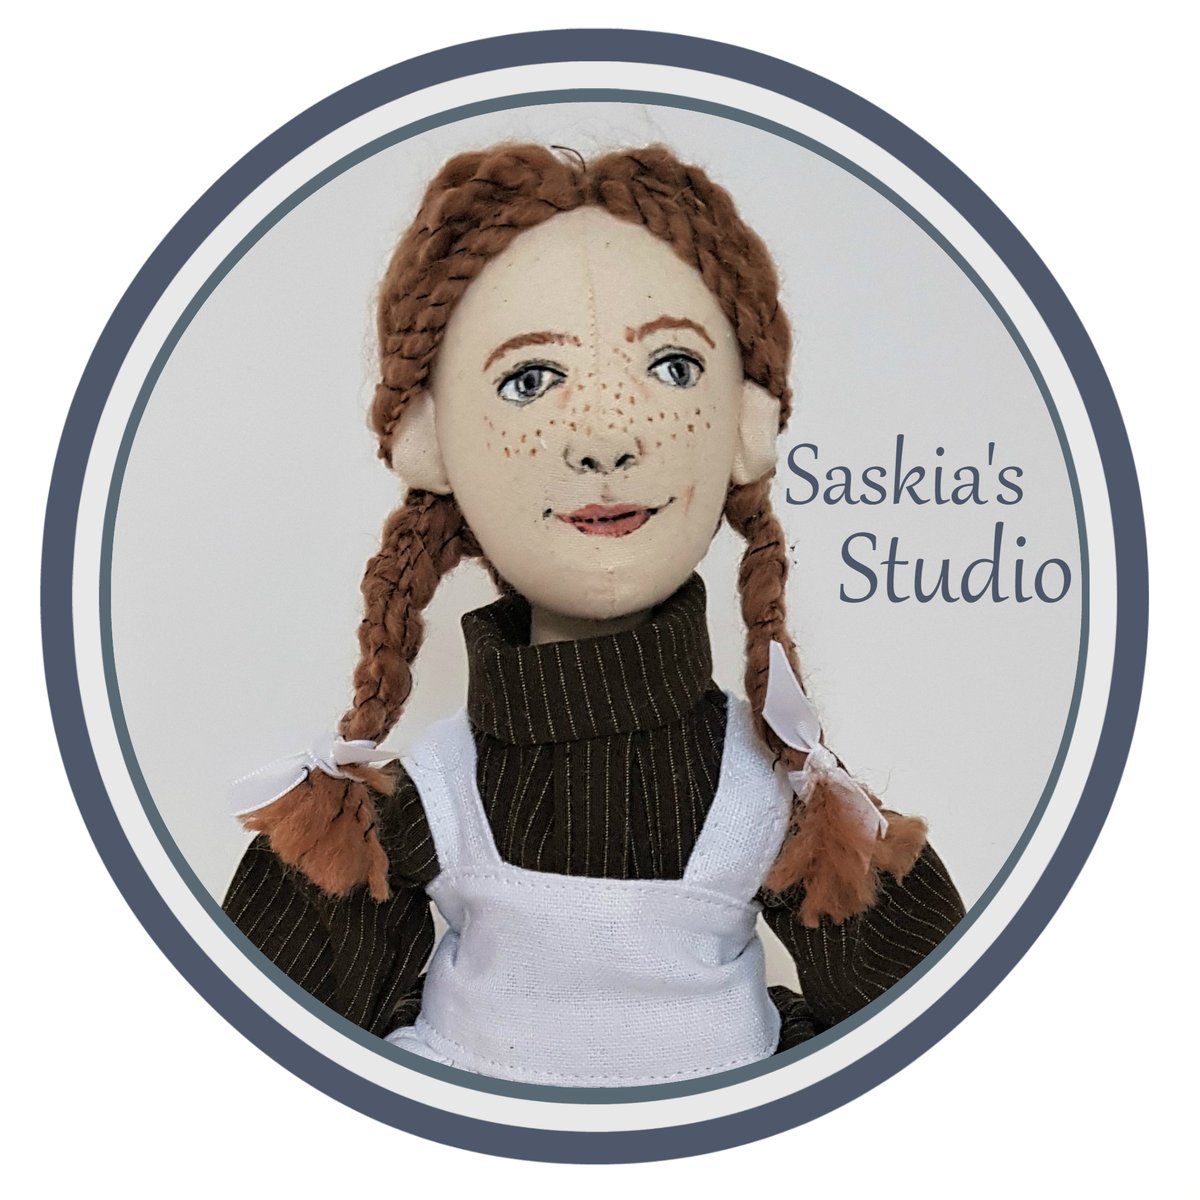 Saskia's Studio